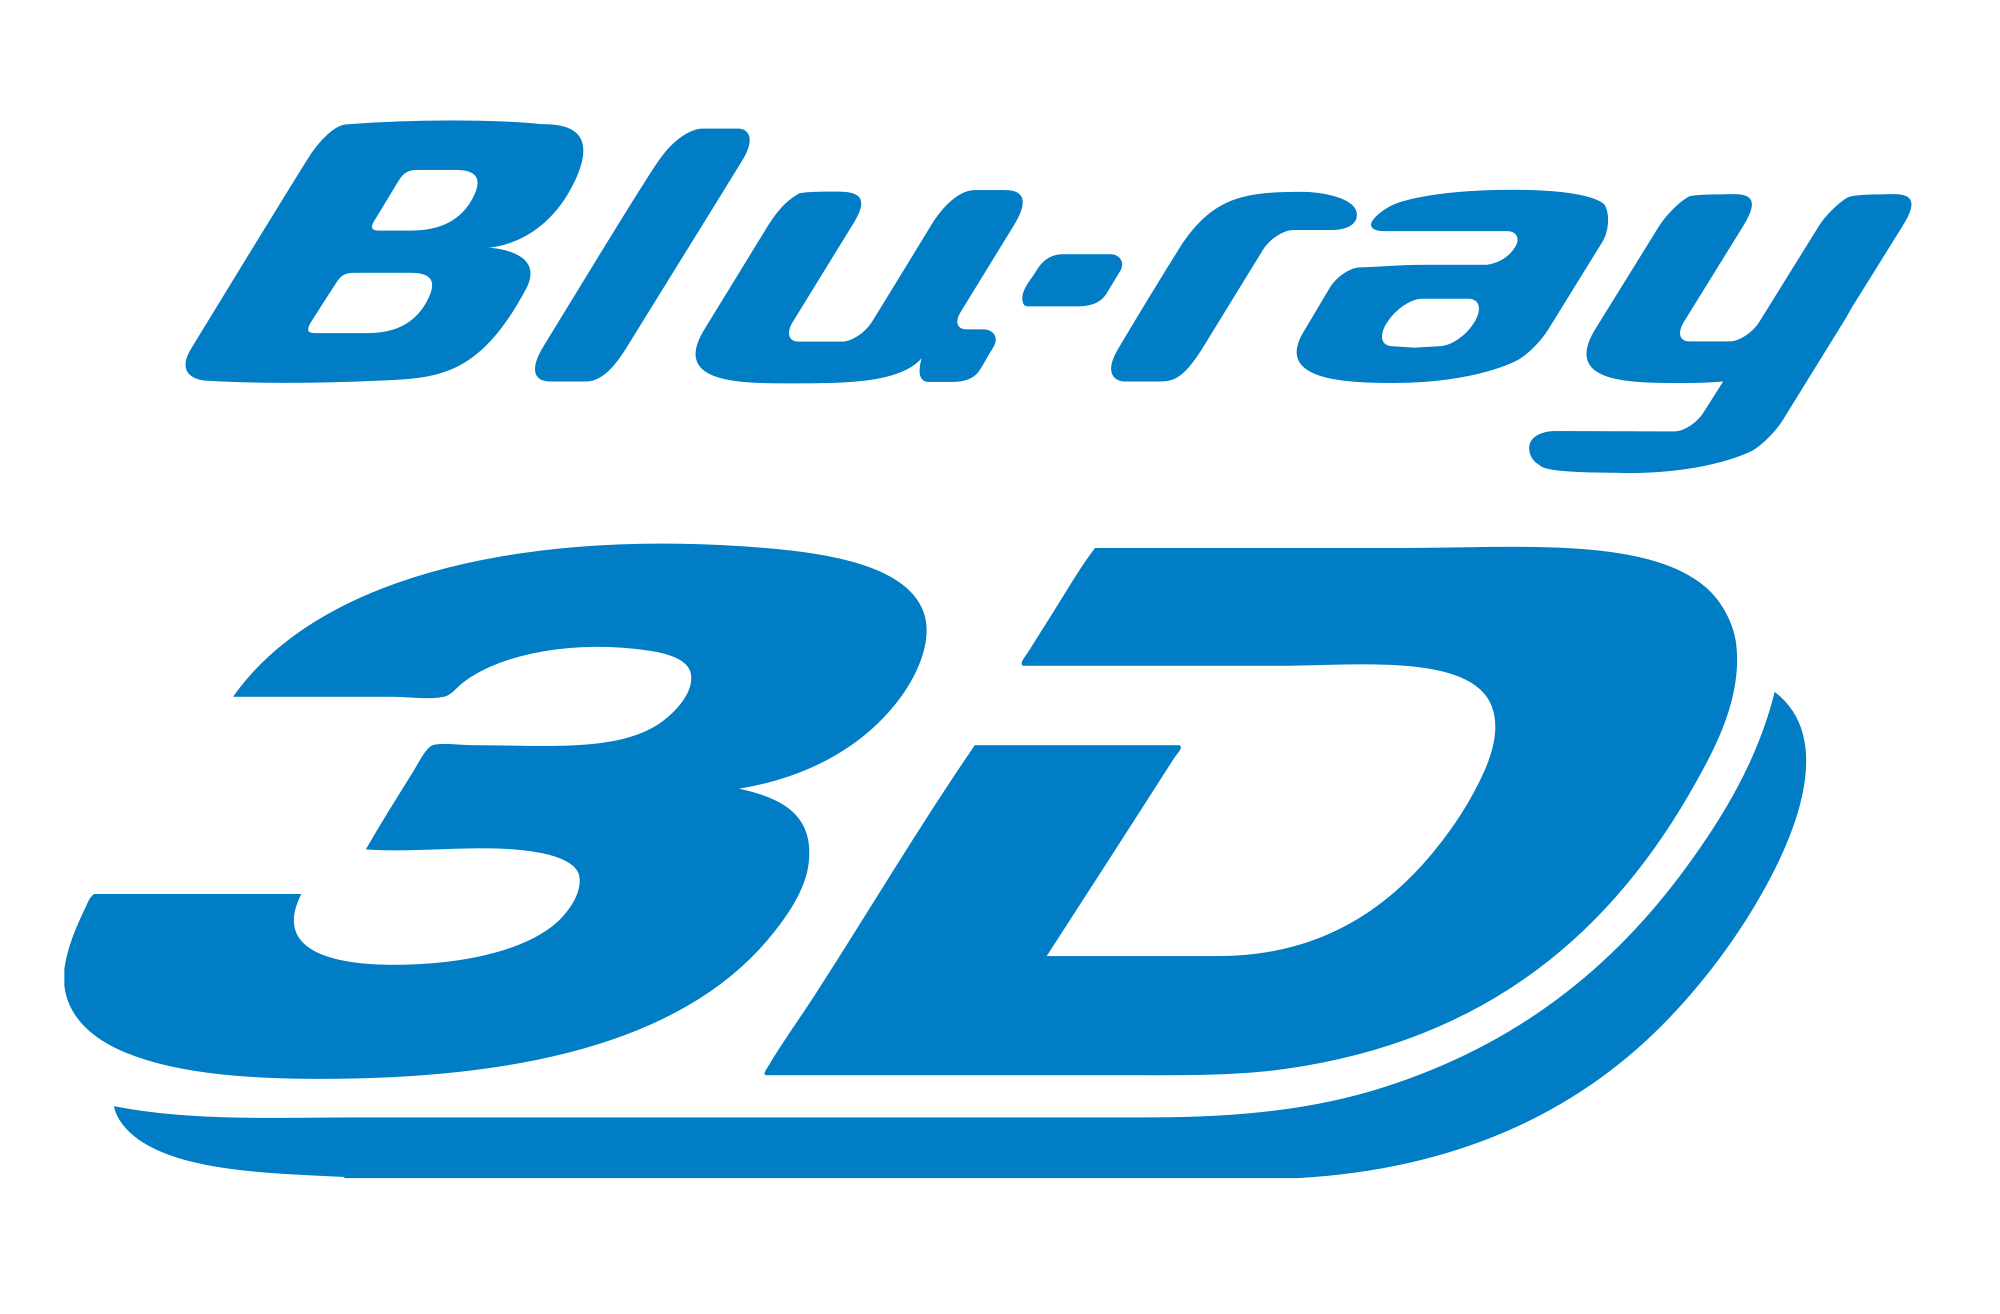 3D Blu-ray